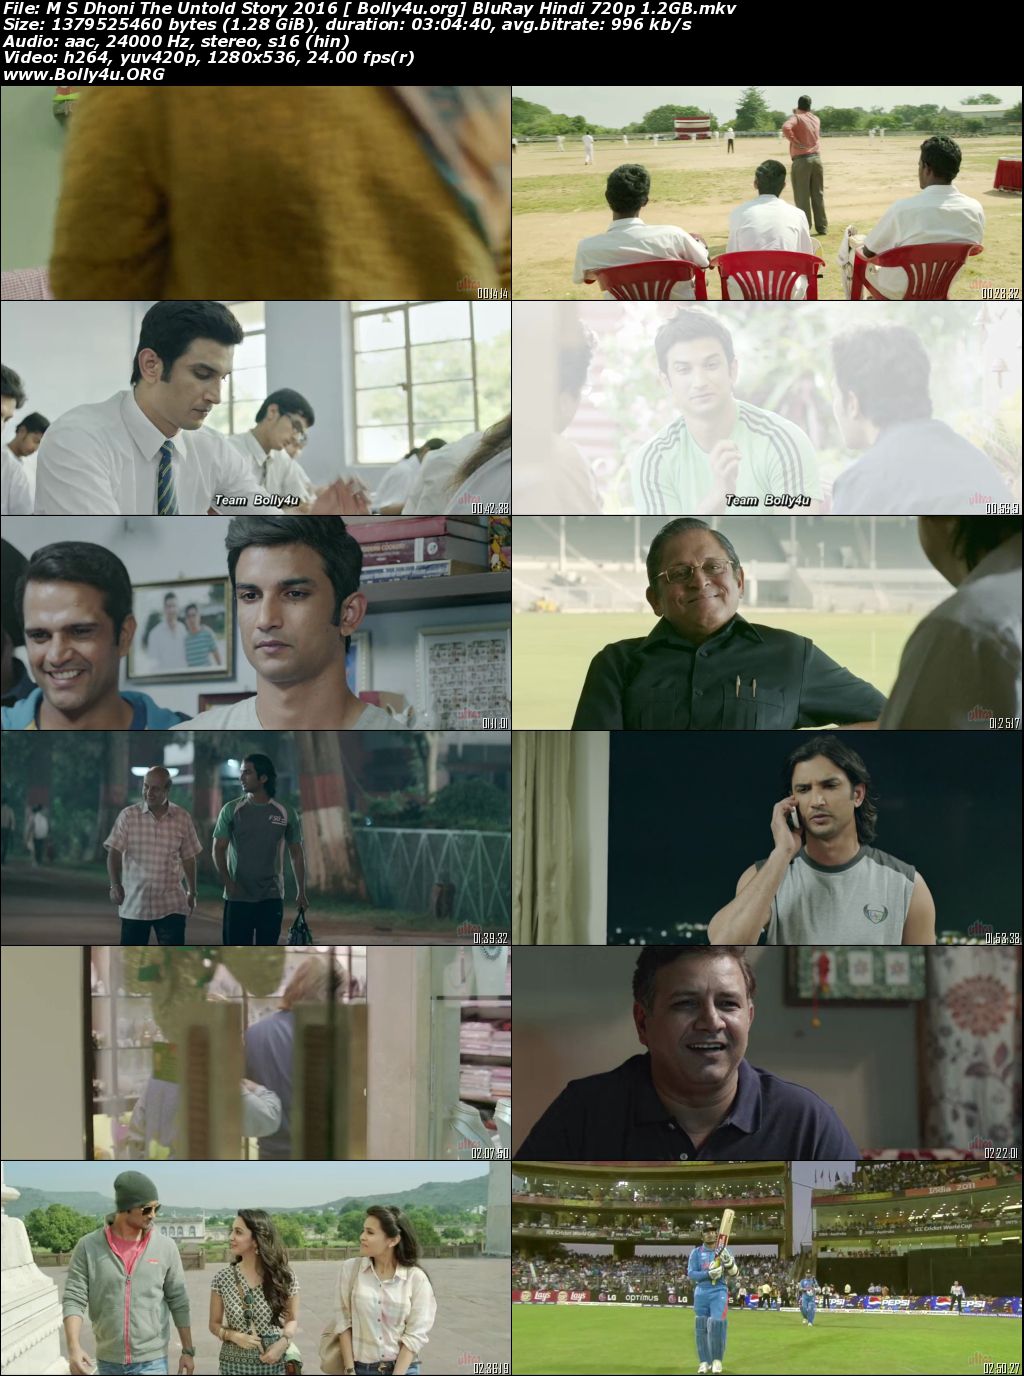 M S Dhoni The Untold Story 2016 BluRay 1.2GB Hindi Movie Download 720p